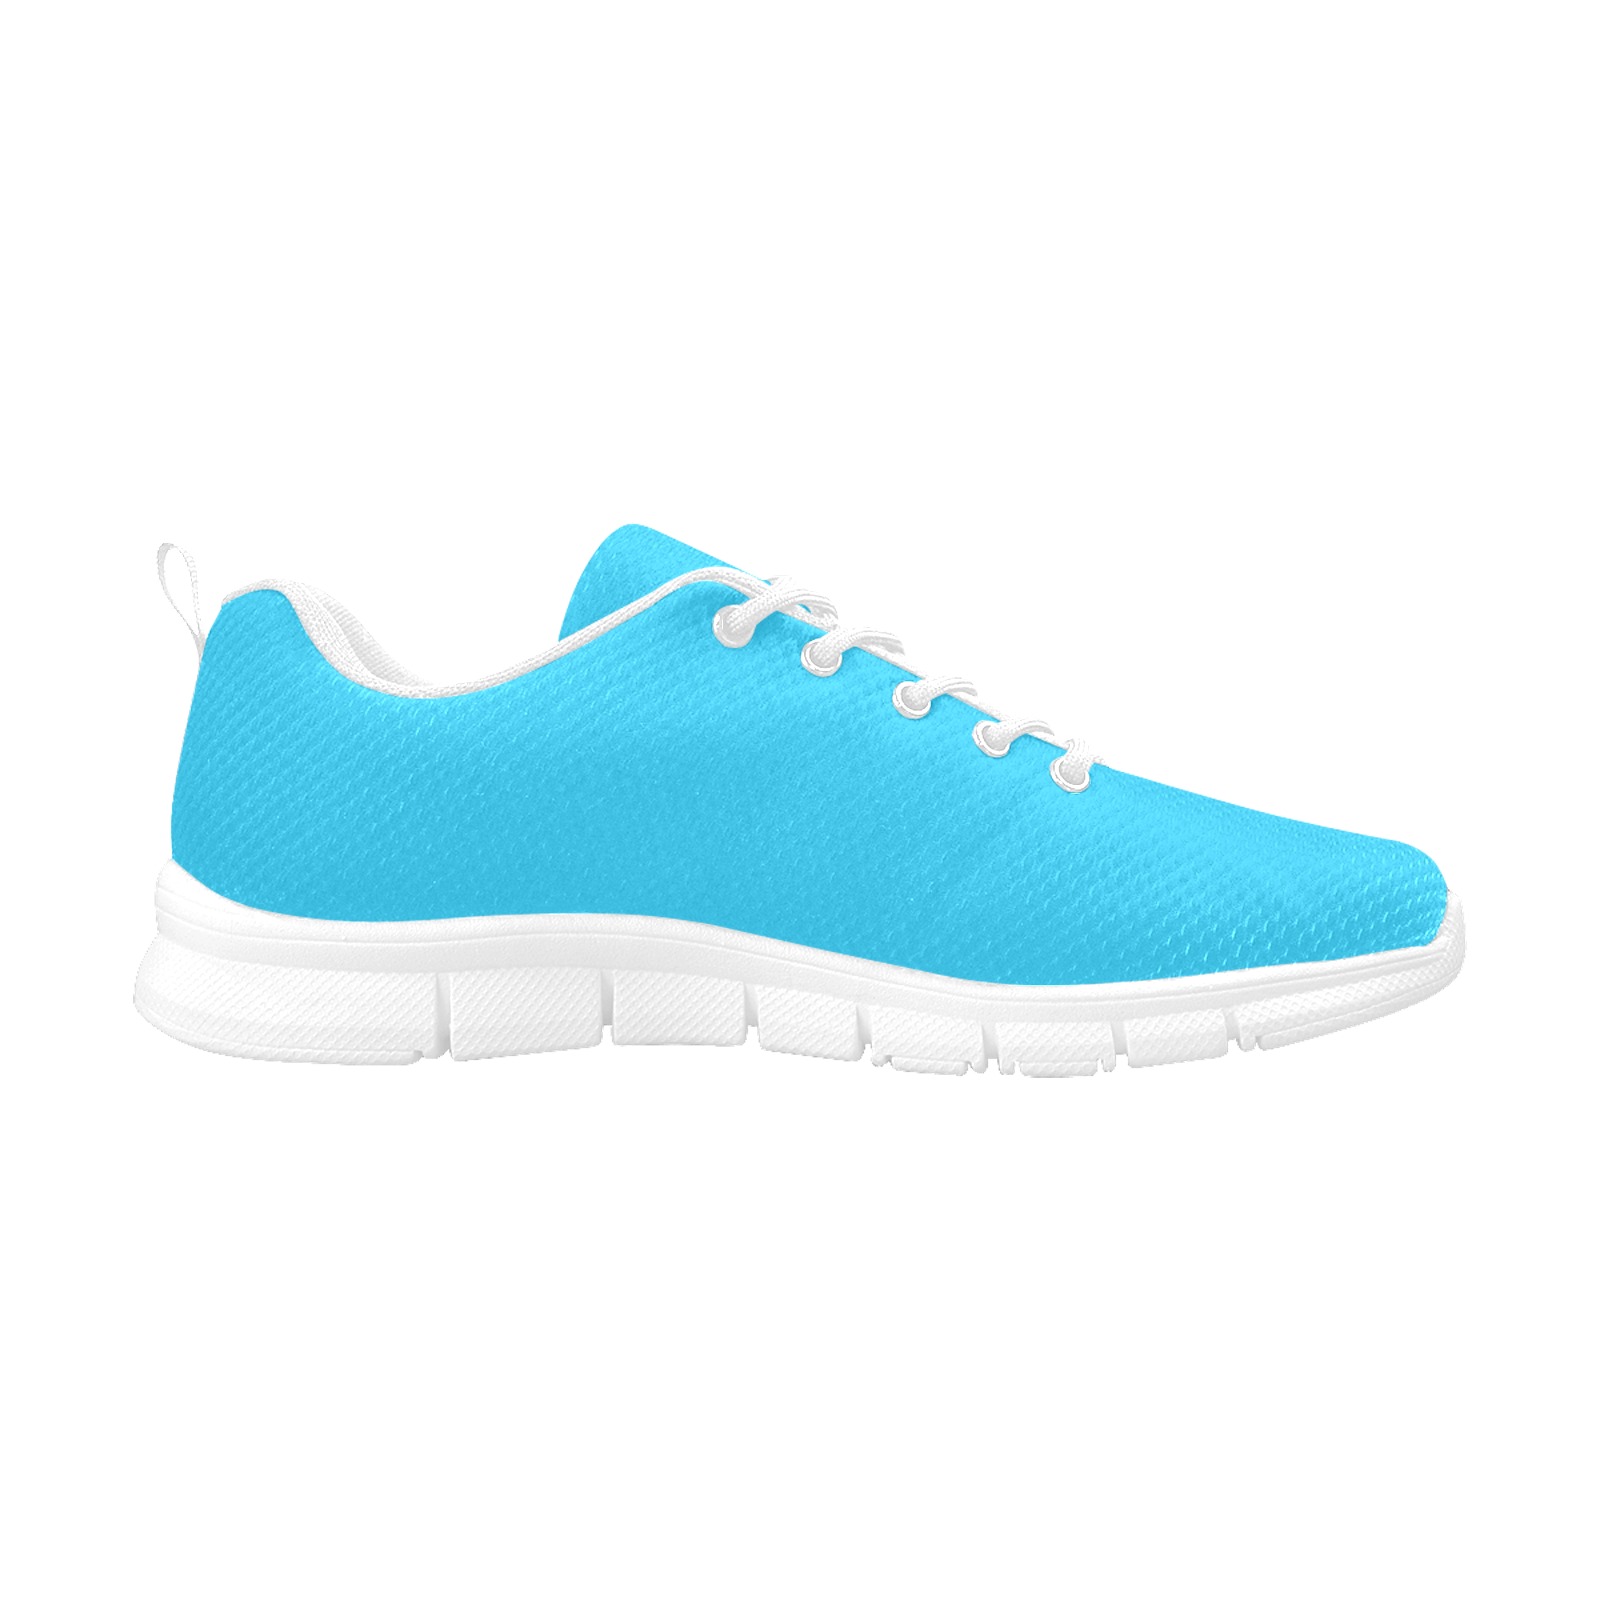 Basic Aqua Women's Breathable Running Shoes (Model 055)